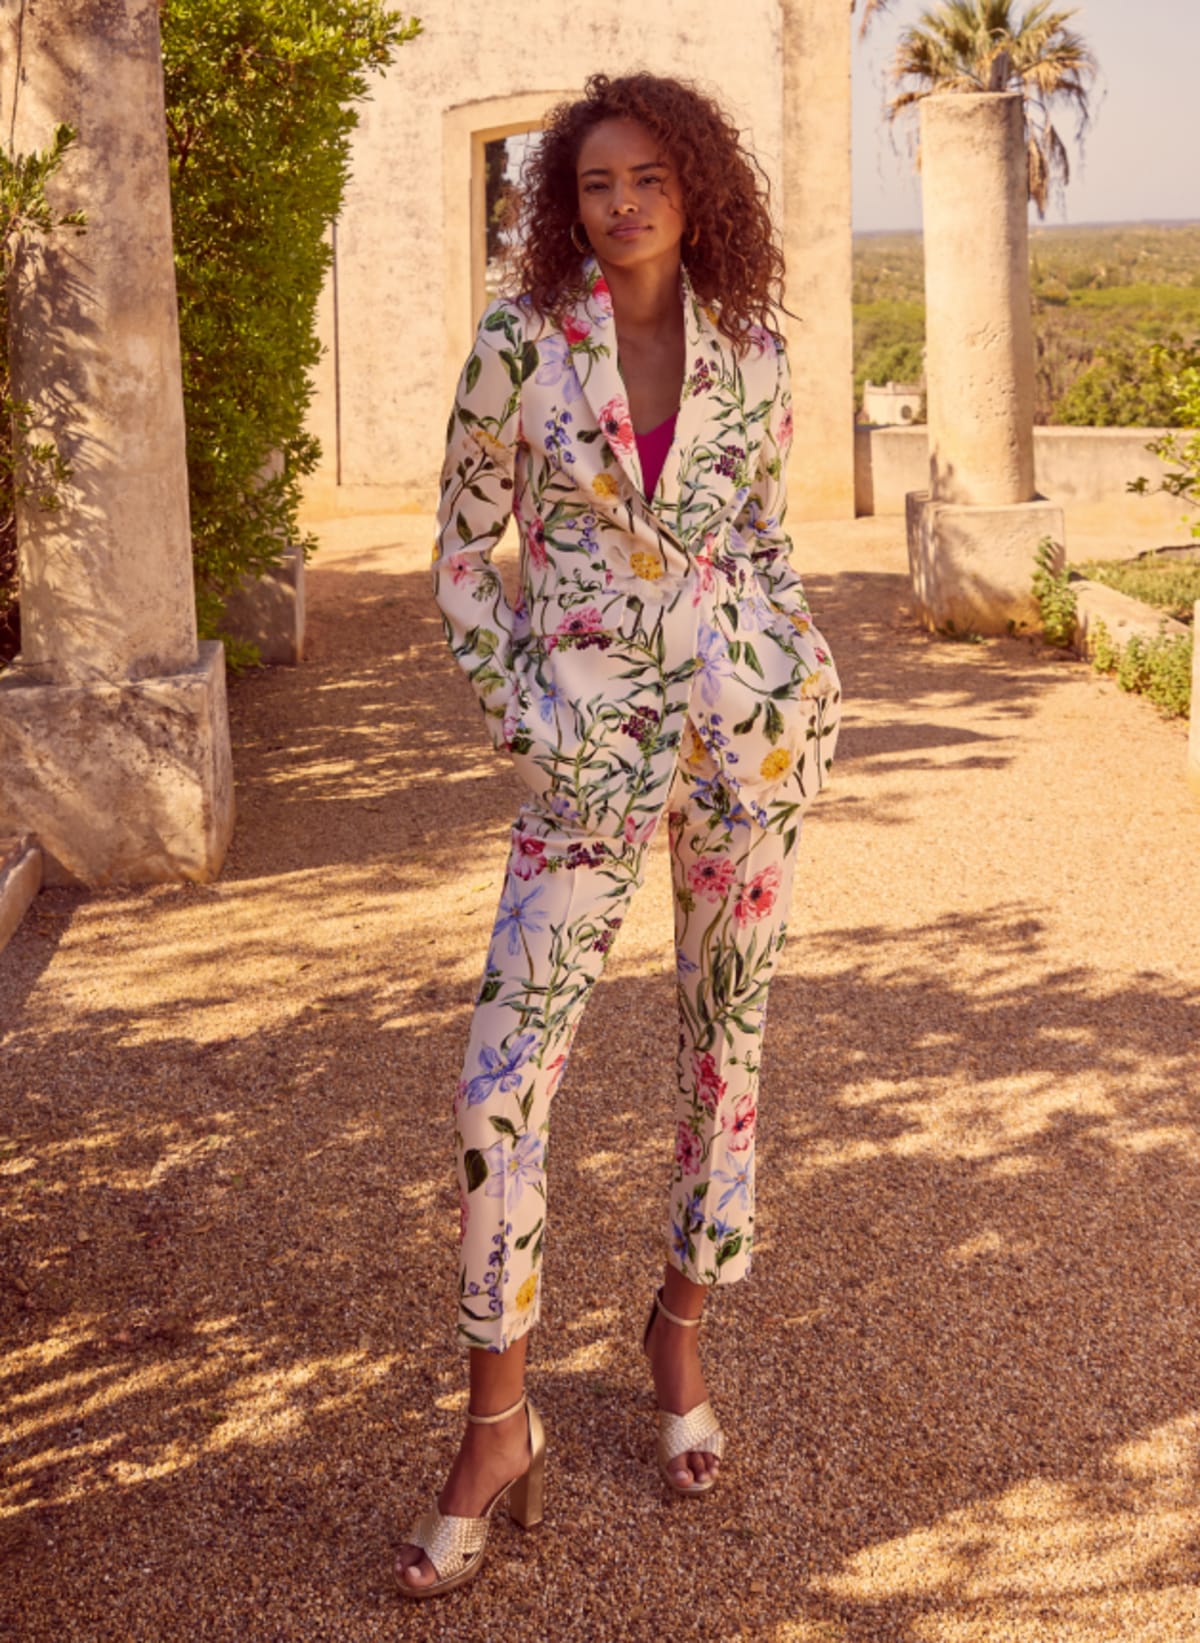 Woman wearing floral suit